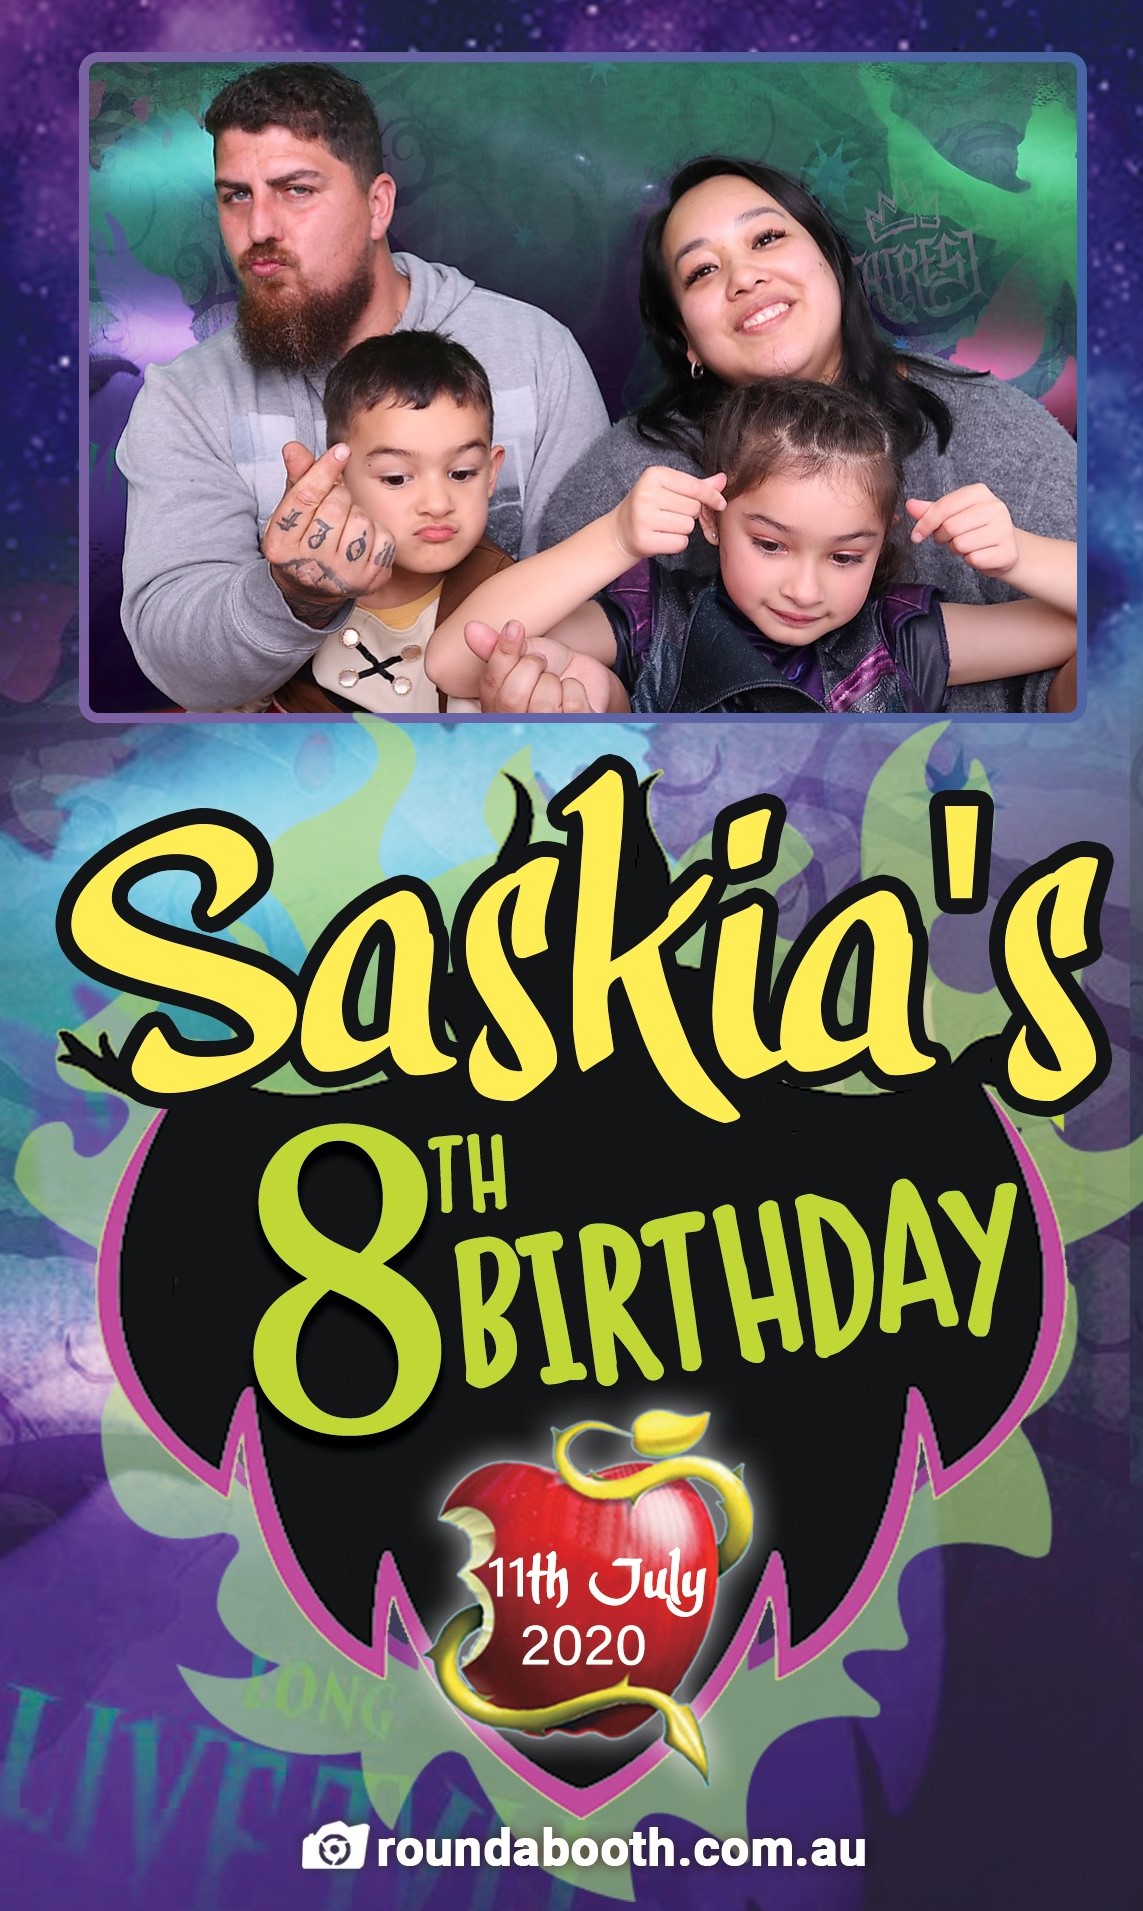 Saskia's 8th Birthday at Old Toongabie byRoundabooth Photobooth